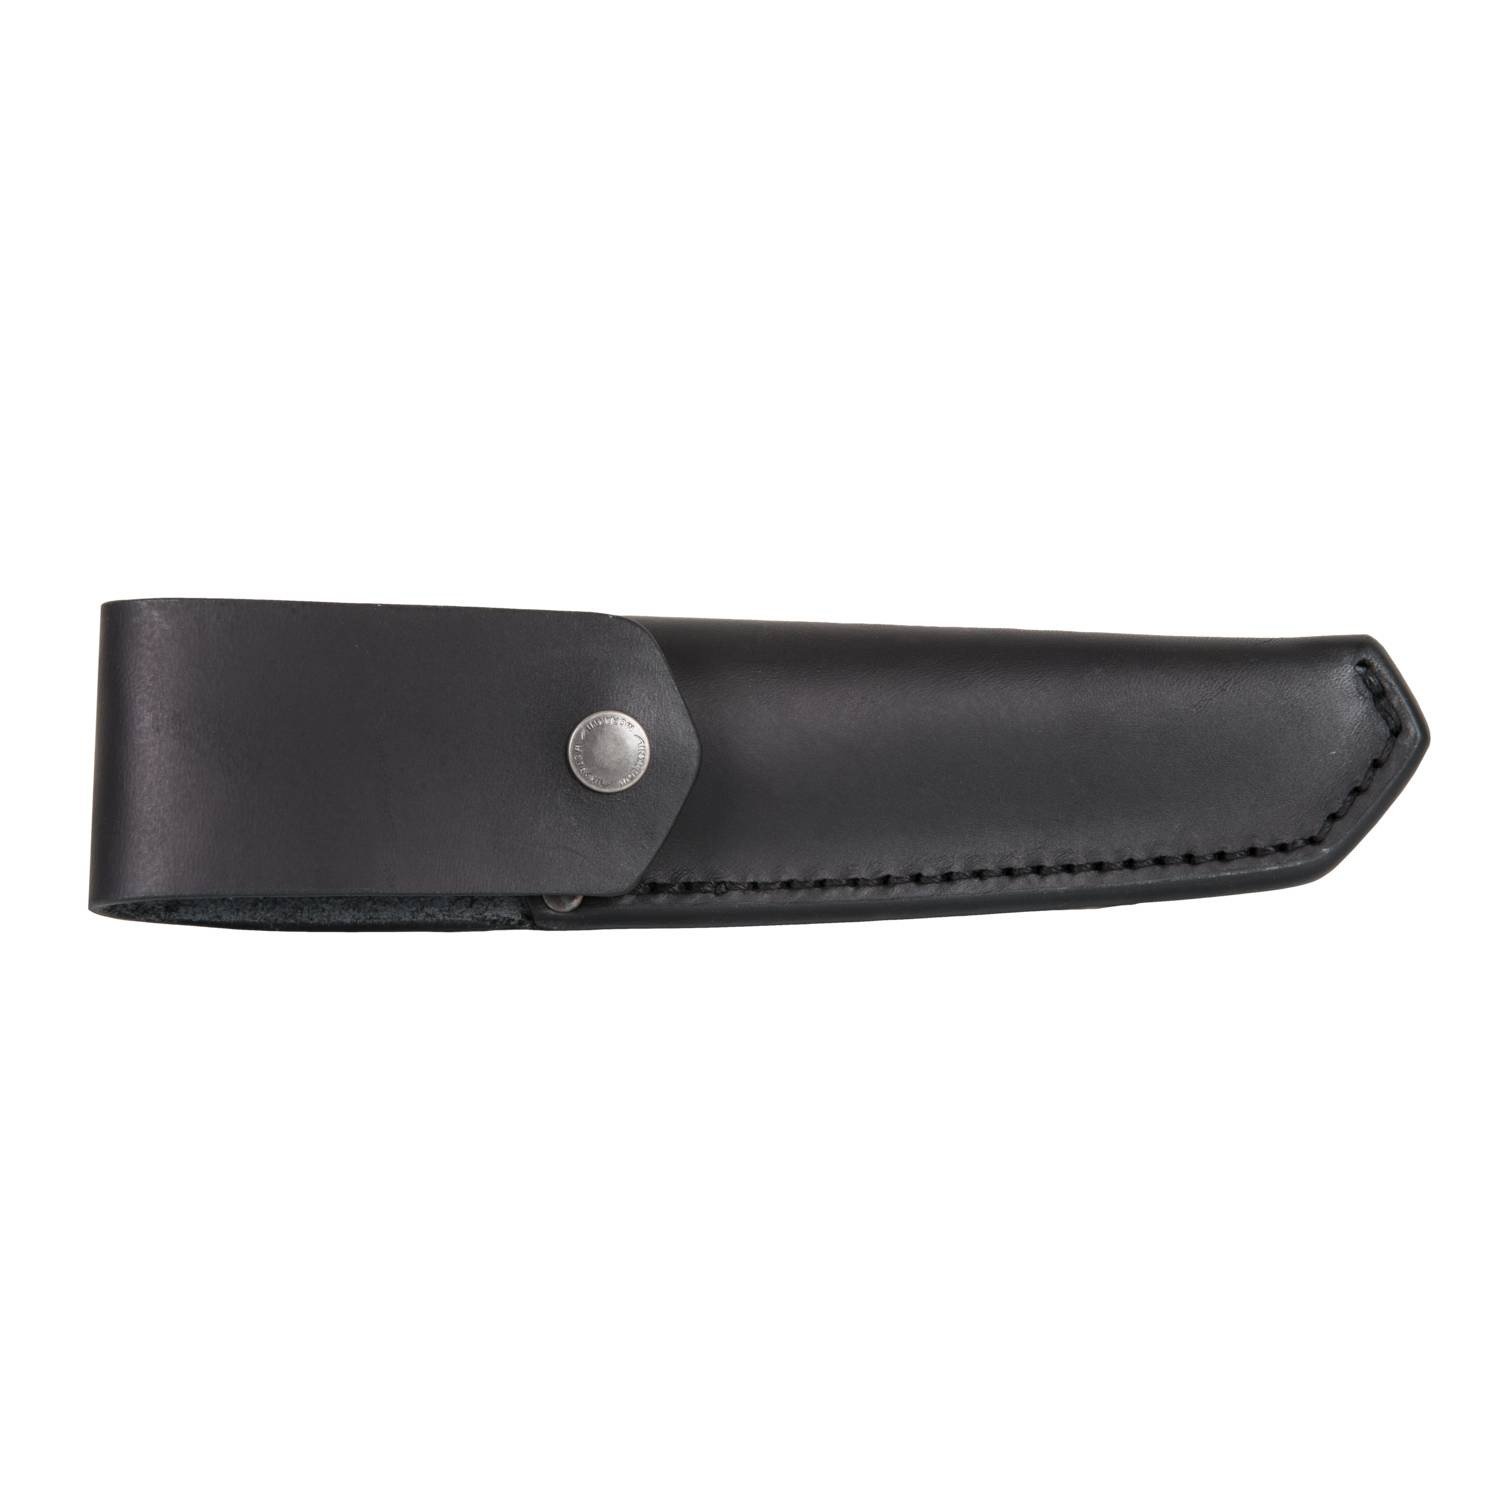 Morakniv® Garberg (Leather Sheath) – Stainless Steel – Black (ID 12635)